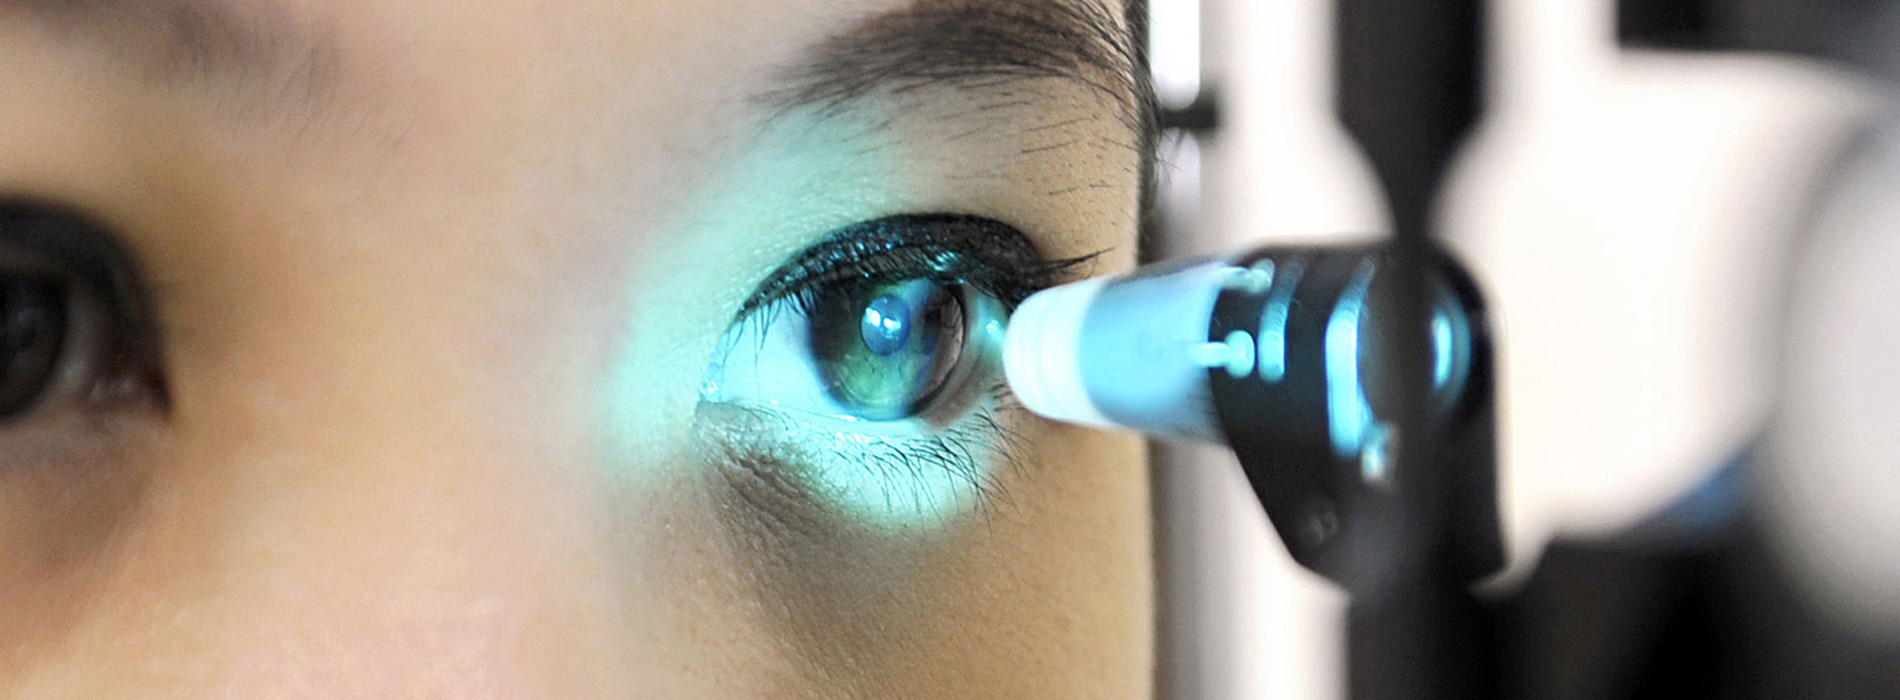 Eye to Eye | Mr. Blue 2.0 Lens Edging, Comprehensive Eye Exams and Macular Degeneration